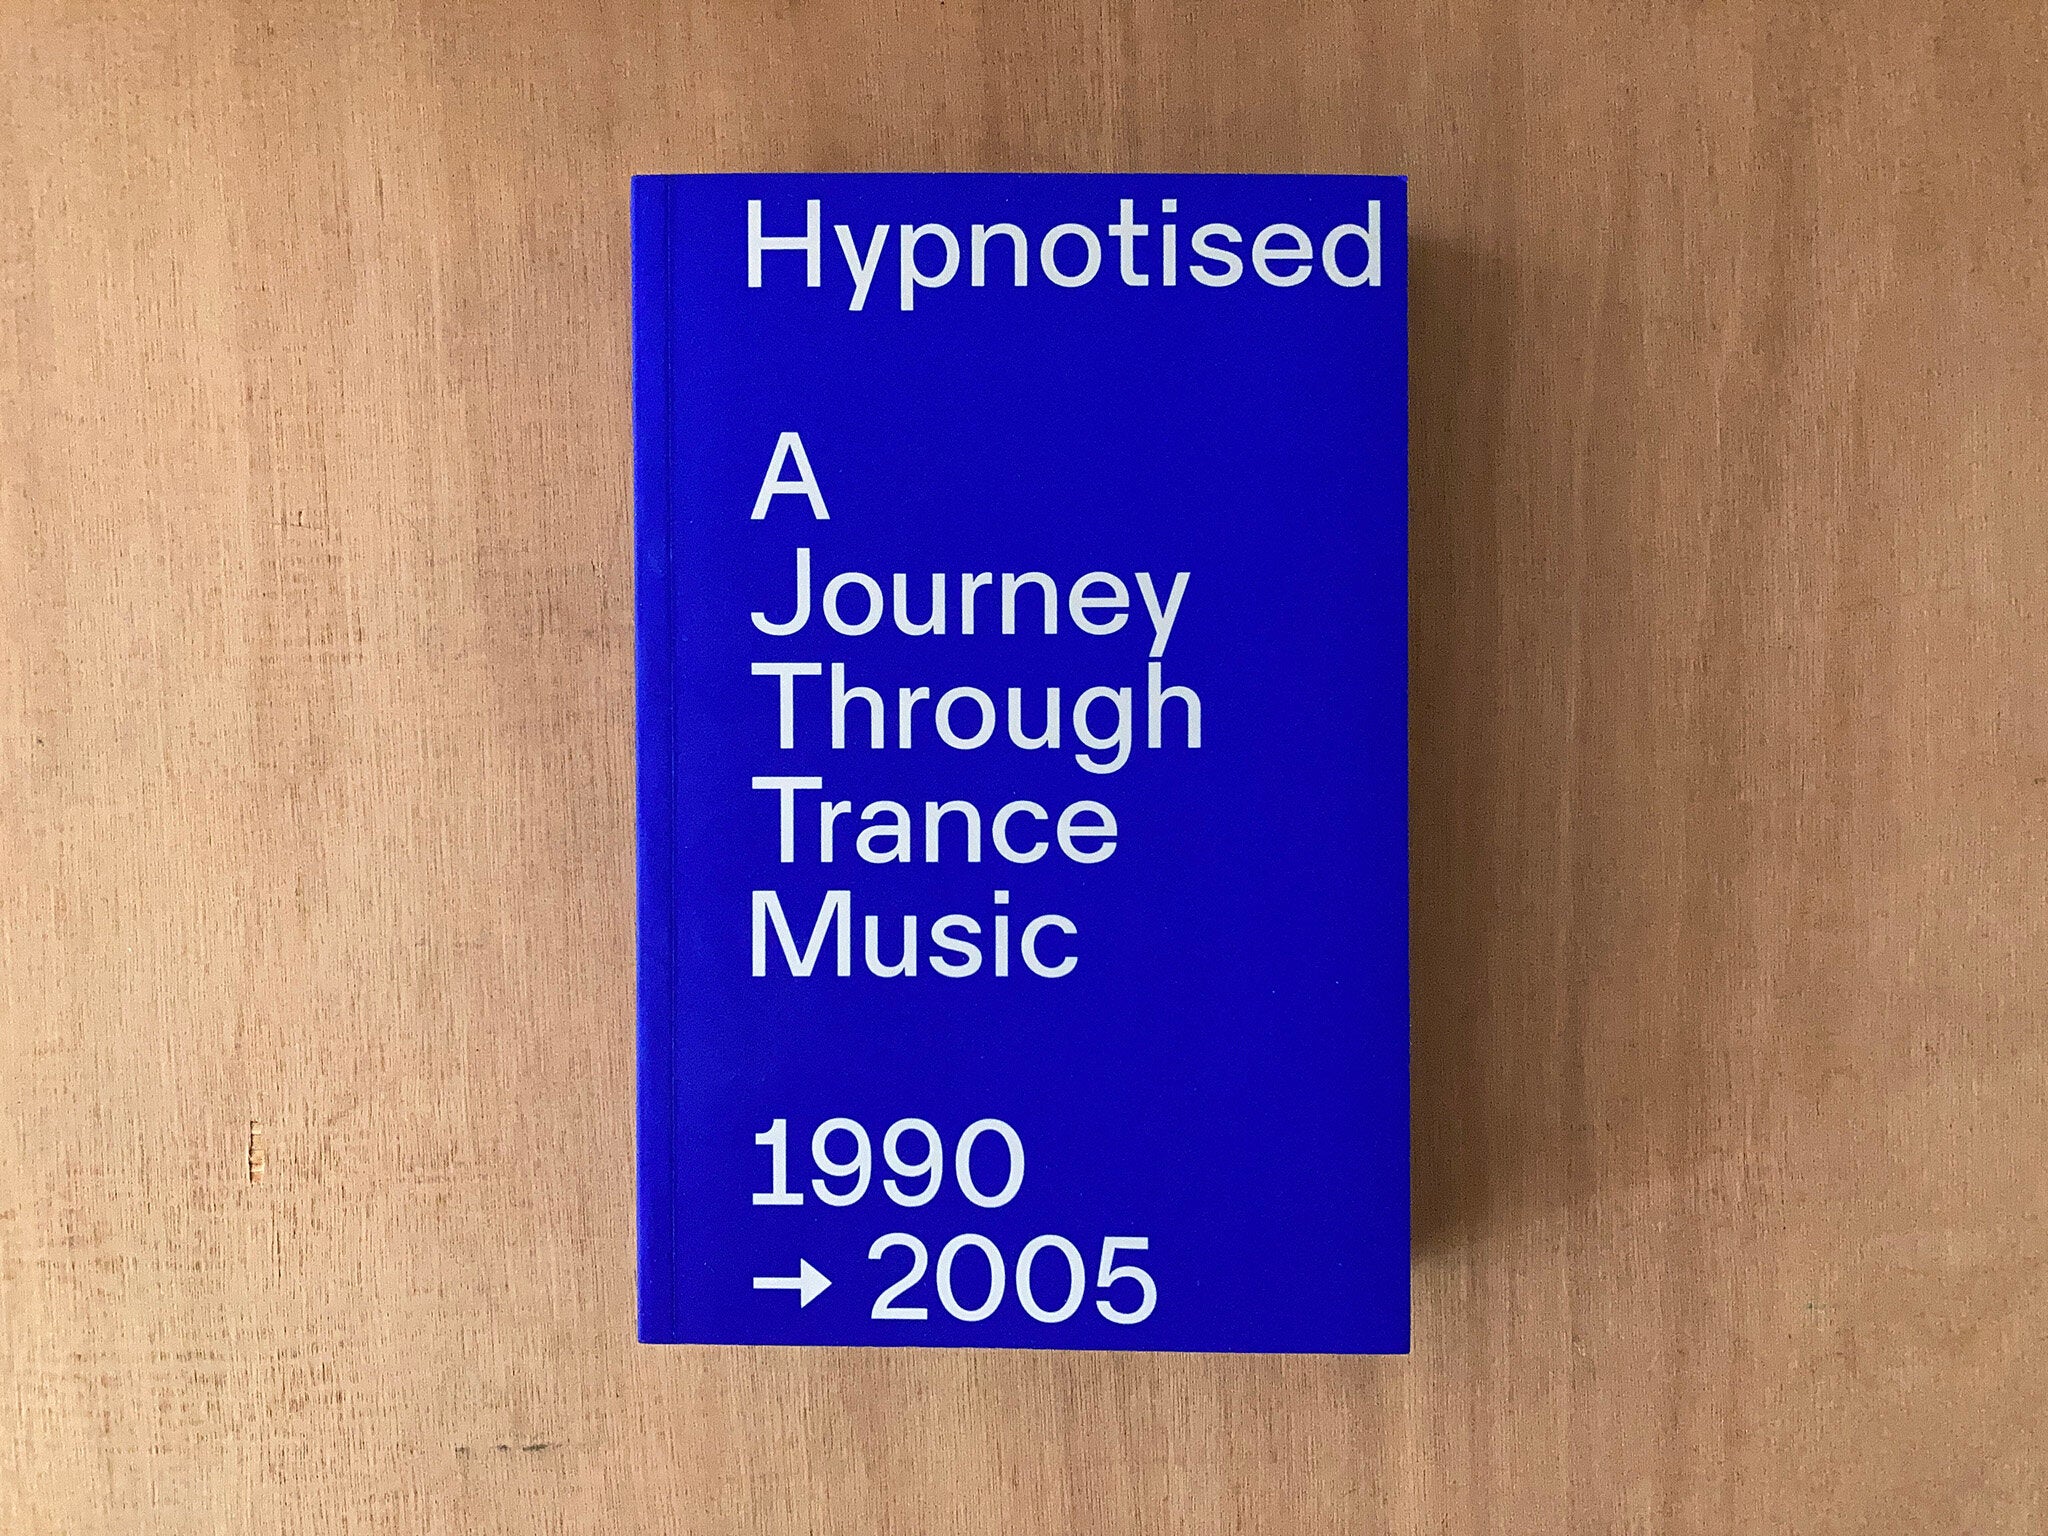 HYPNOTISED: A JOURNEY THROUGH TRANCE MUSIC (1990 - 2005)